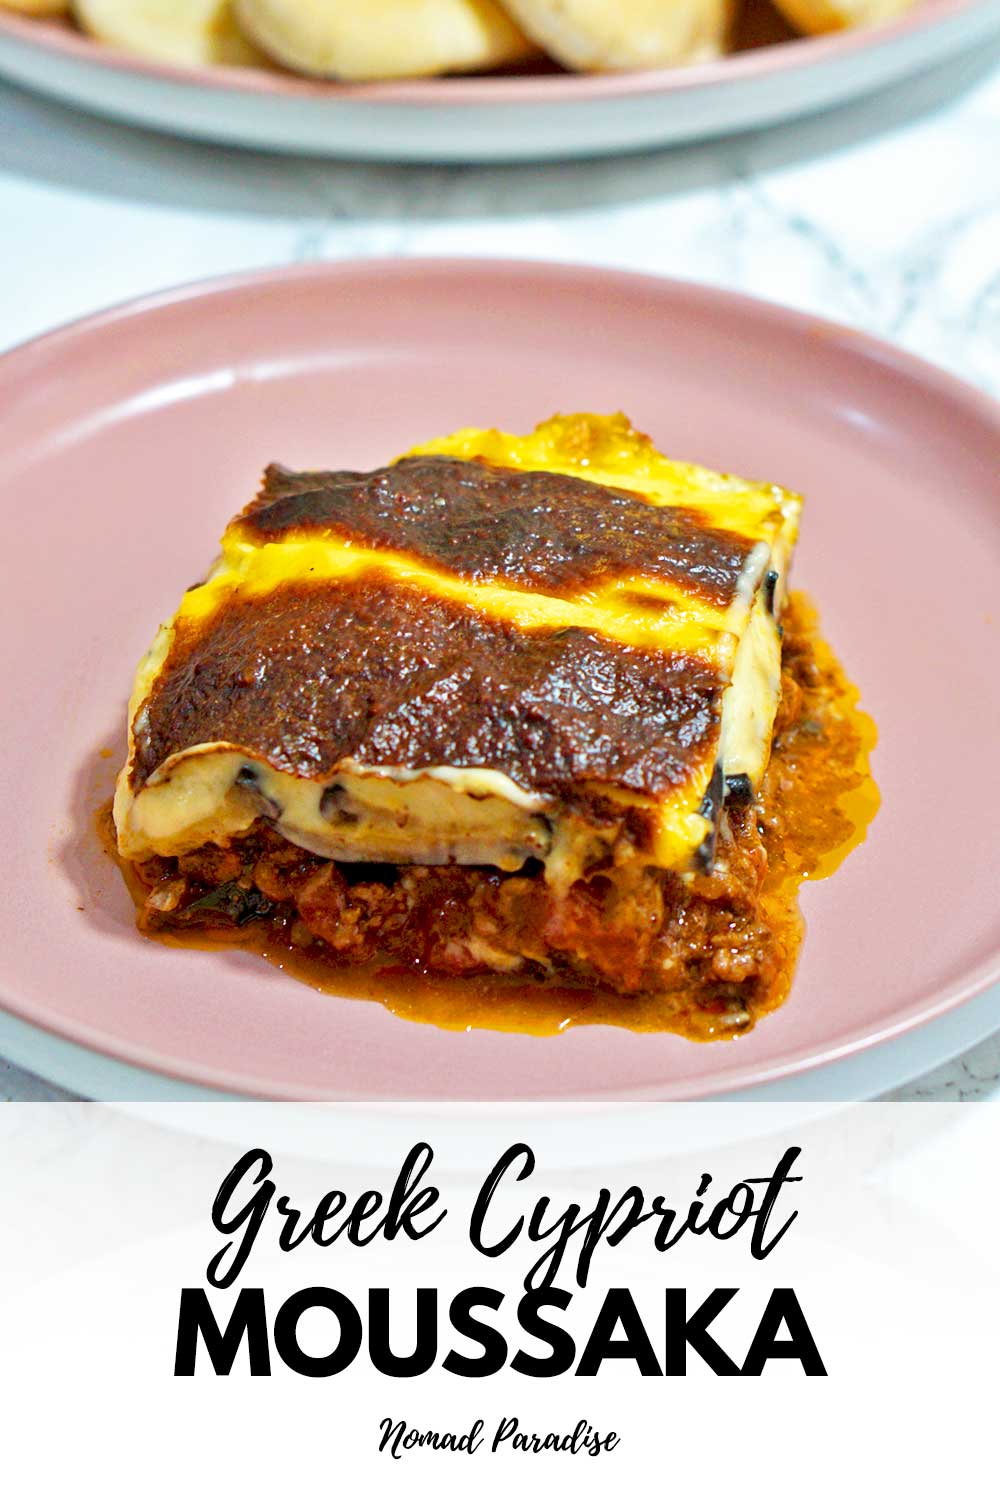 Greek Cypriot-Inspired Moussaka (Eggplant "Lasagna") Recipe - Nomad ...